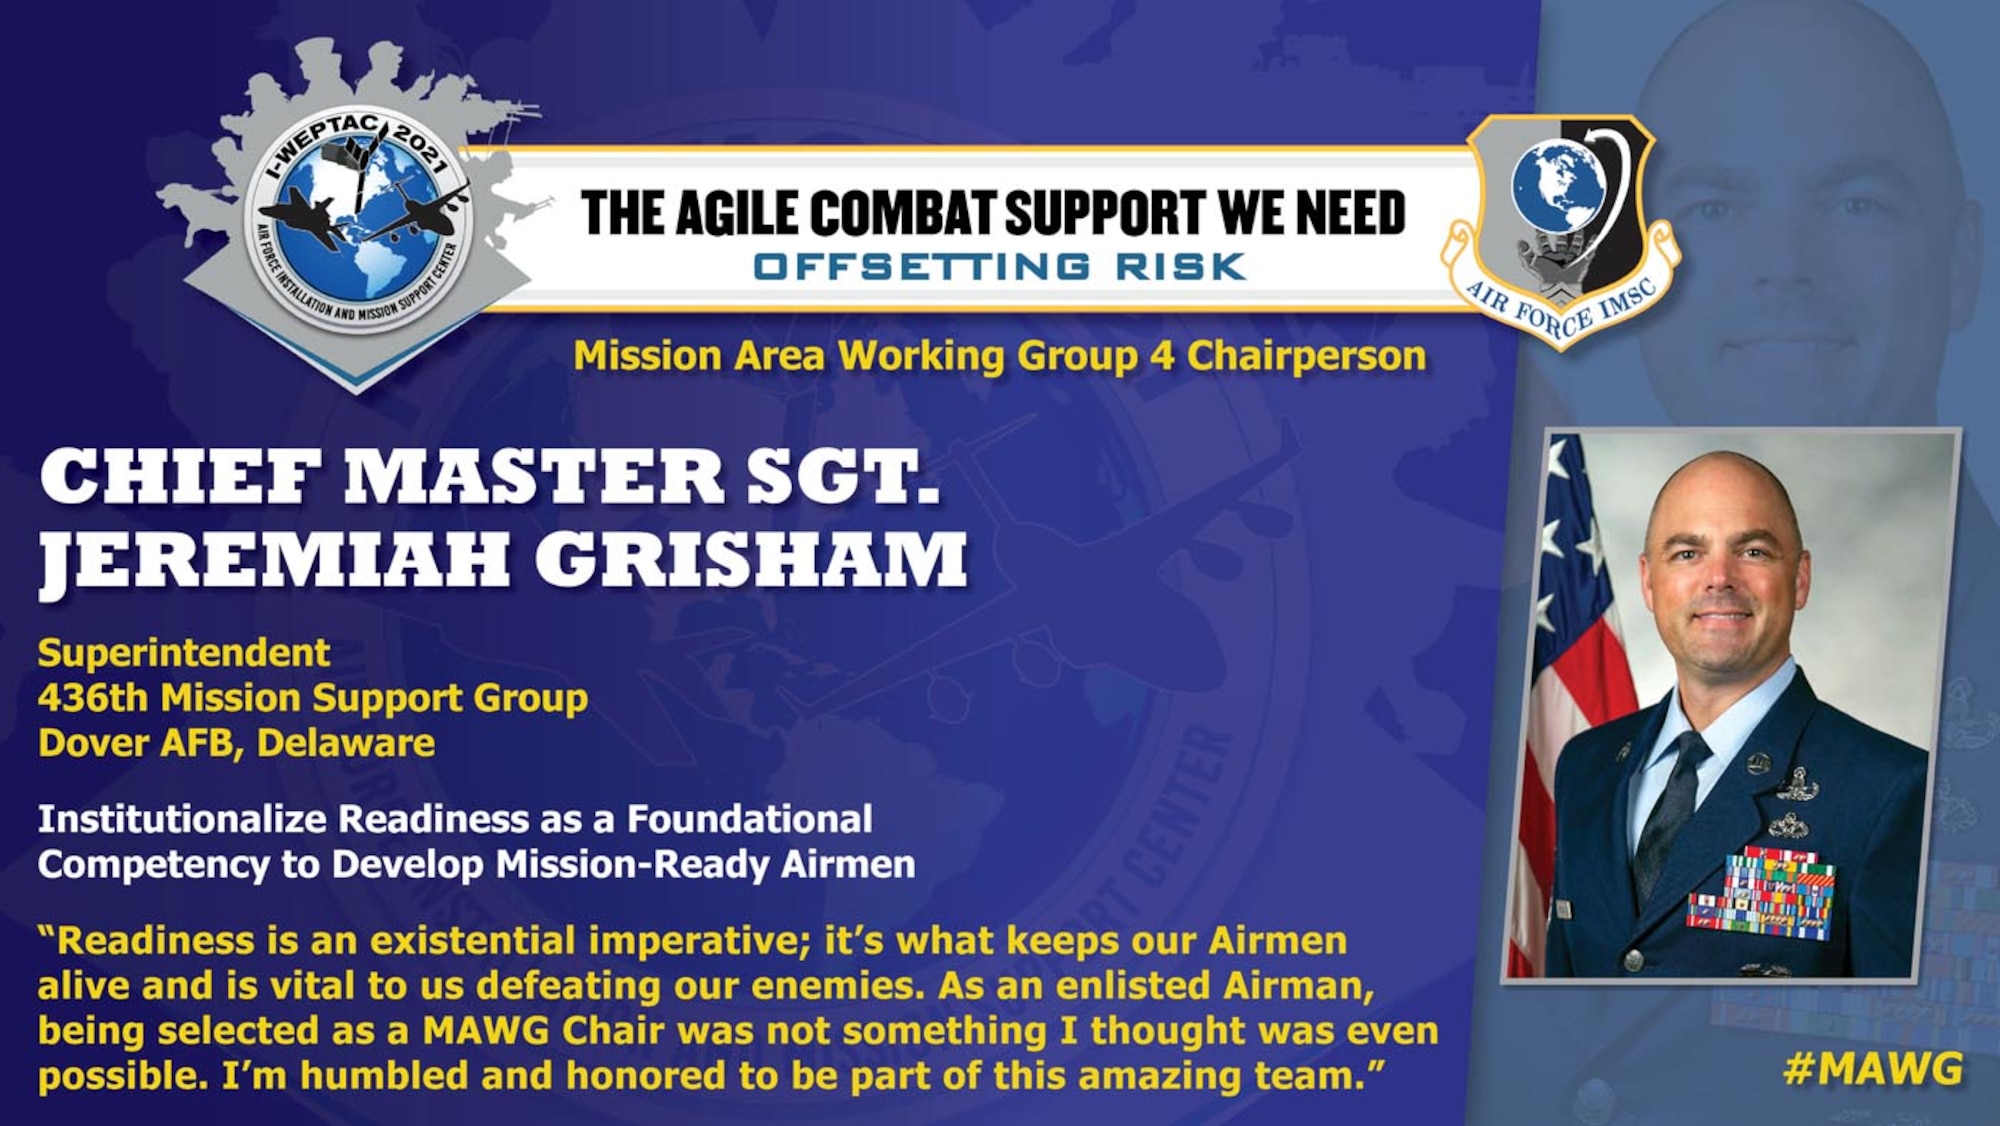 CMSgt. Jeremiah Grisham, 2021 I-WEPTAC MAWG Chair 4